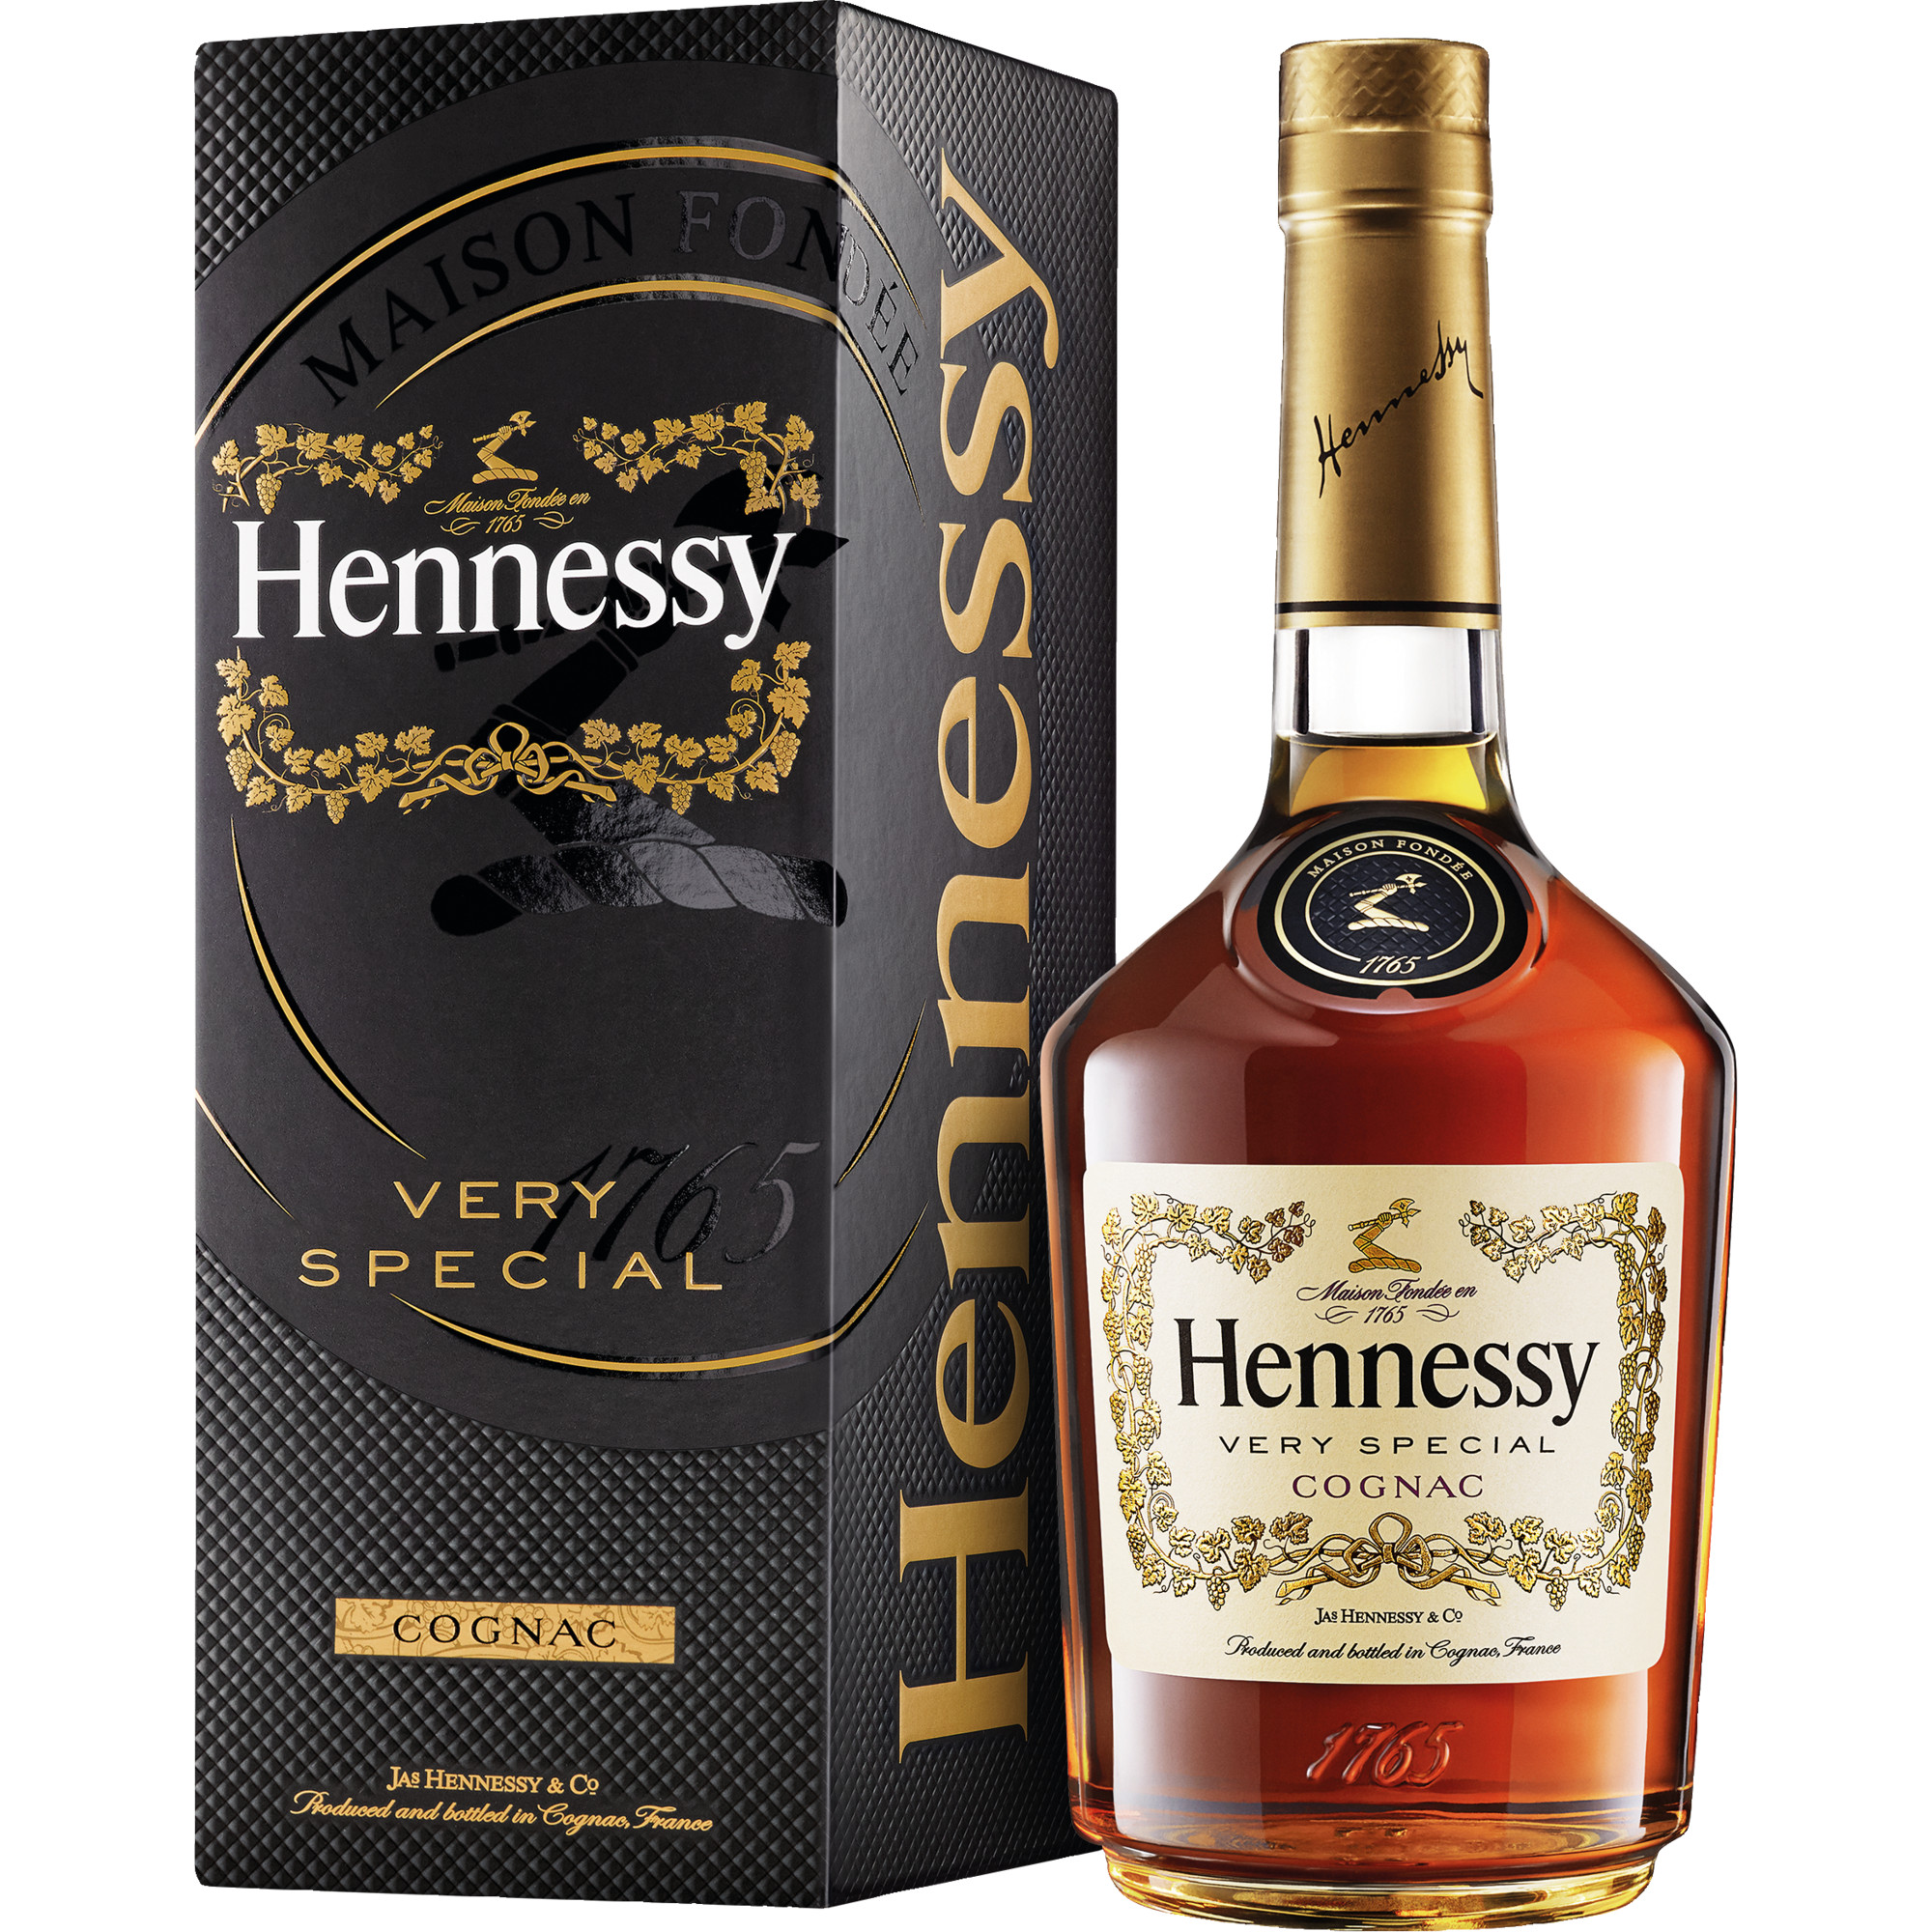 Cognac Hennessy VS, Cognac AOP, 0,7L, 40% Vol., Geschenketui, Cognac, Spirituosen Hennessy Cognac, Cognac, France Hawesko DE